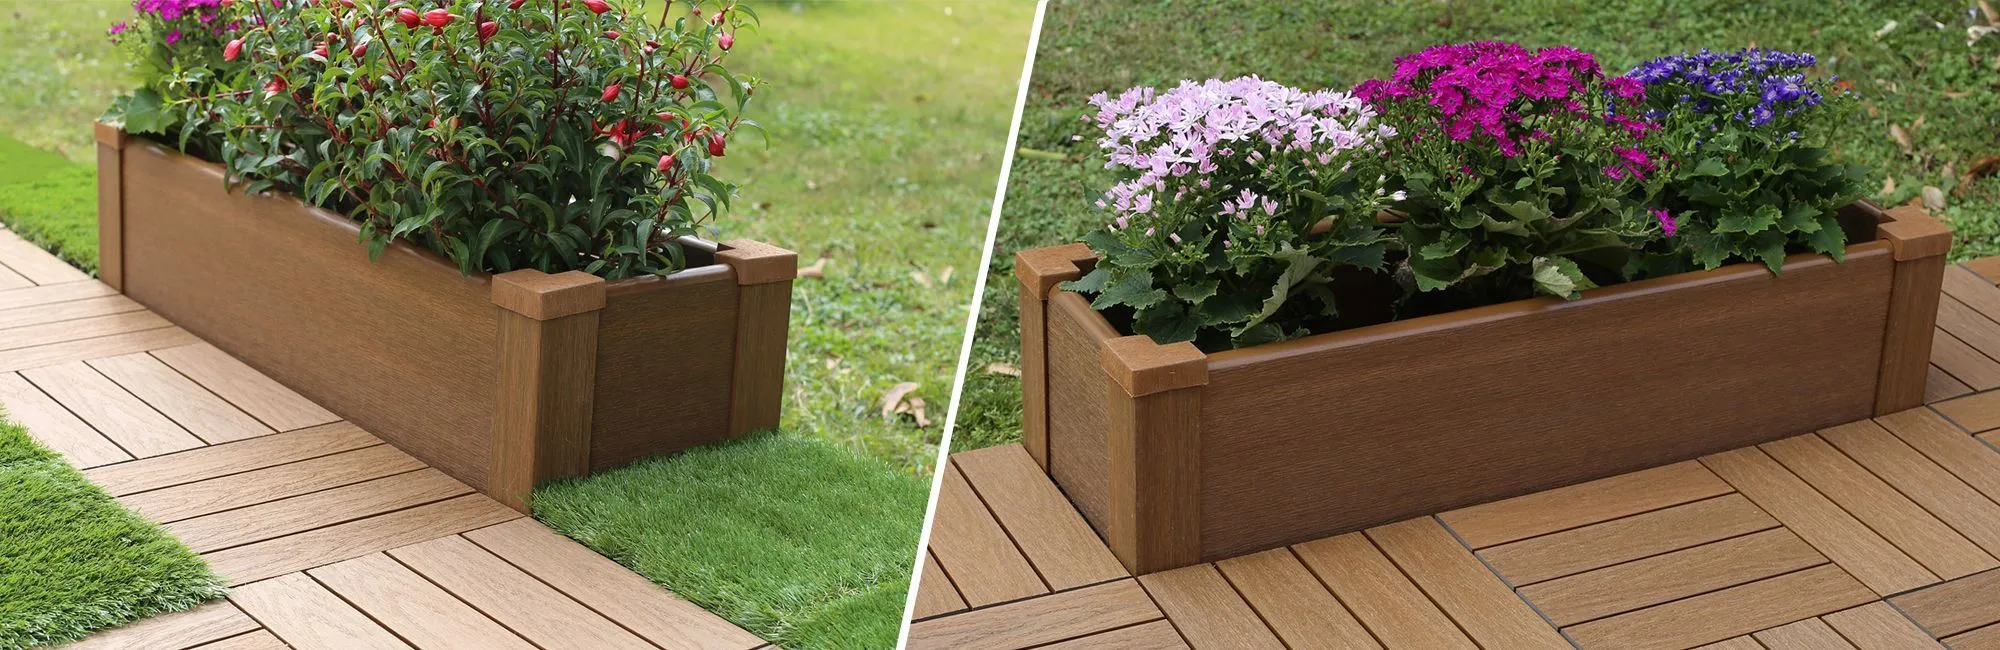 wood flower pots